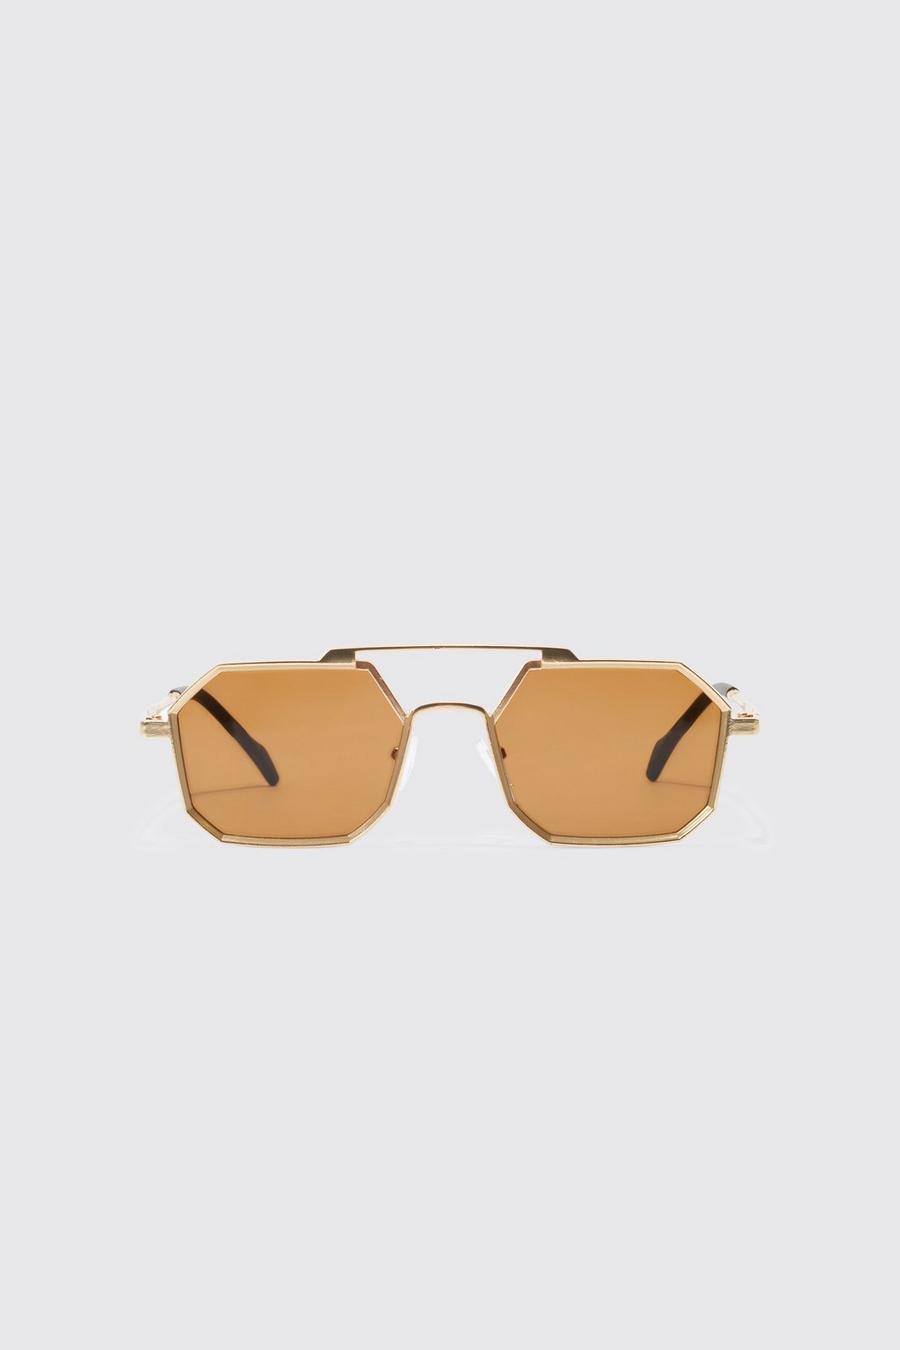 Sechseckige Pilotenbrille, Gold metallic